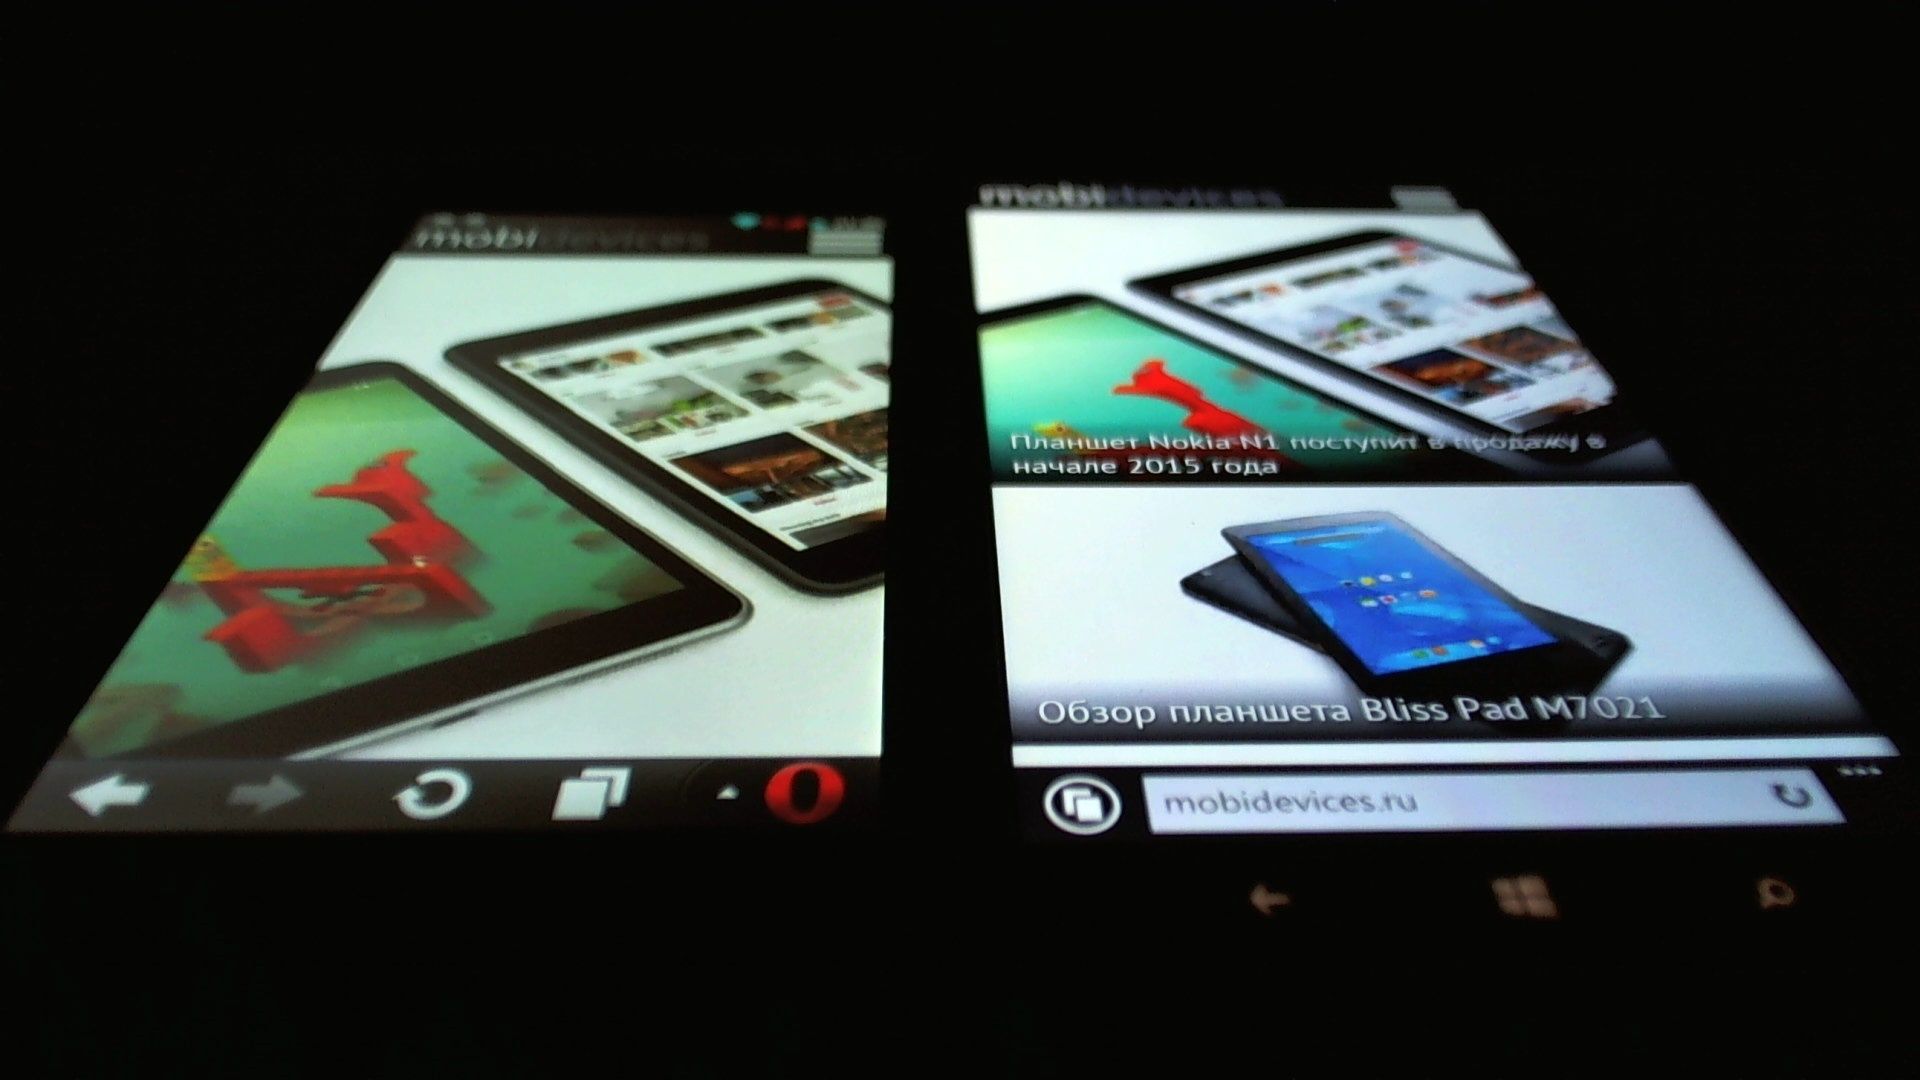 Сравнение экранов Turbo X Dream и Nokia Lumia 1520